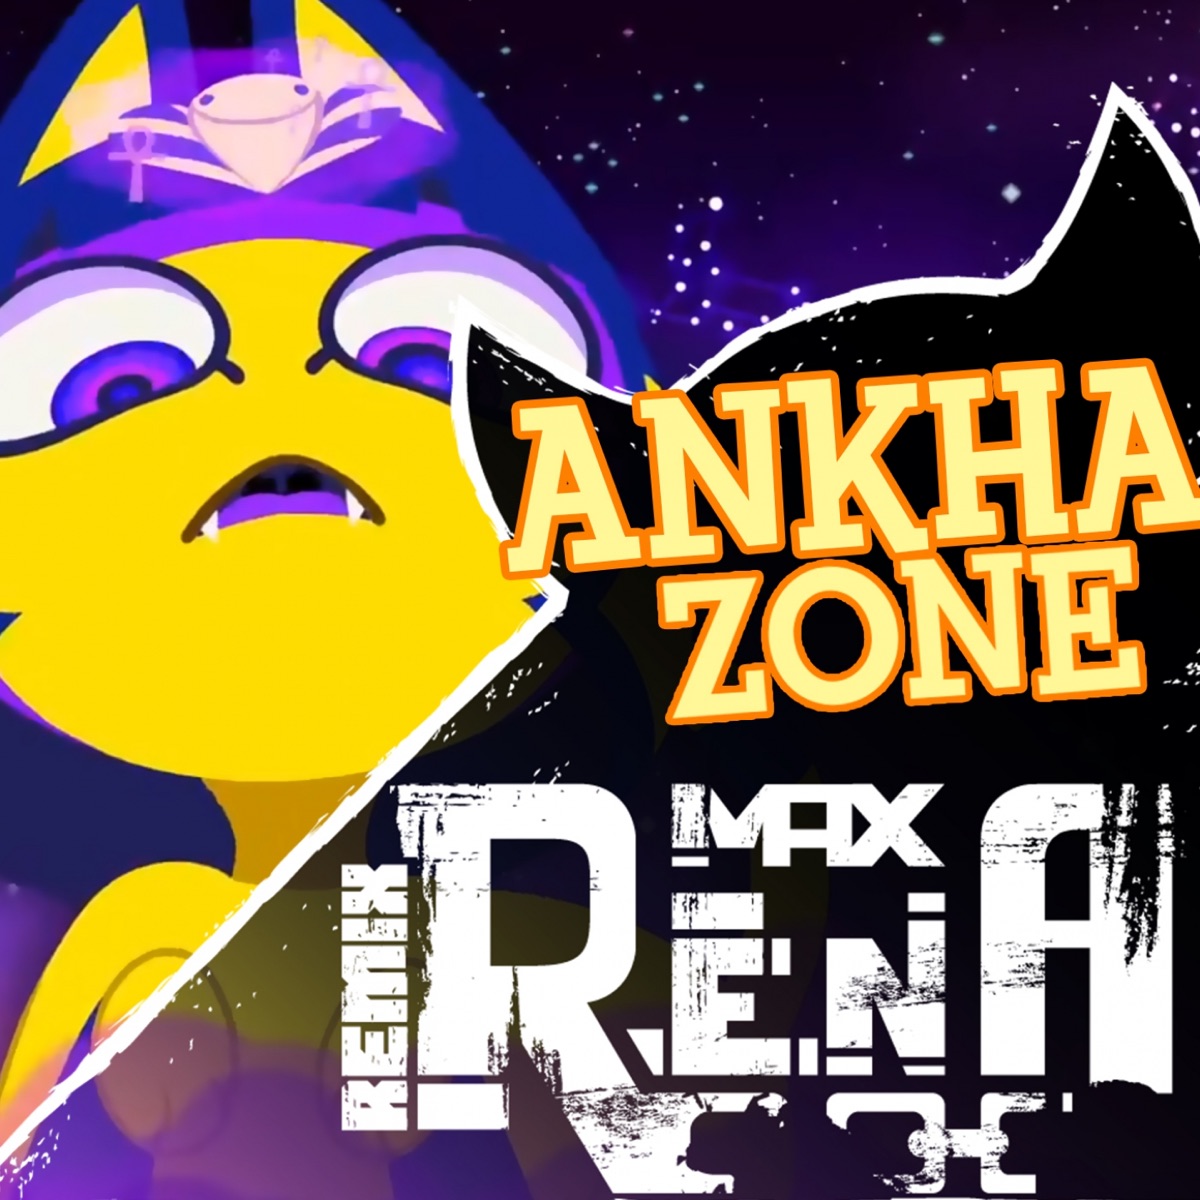 Ankha zone vidio